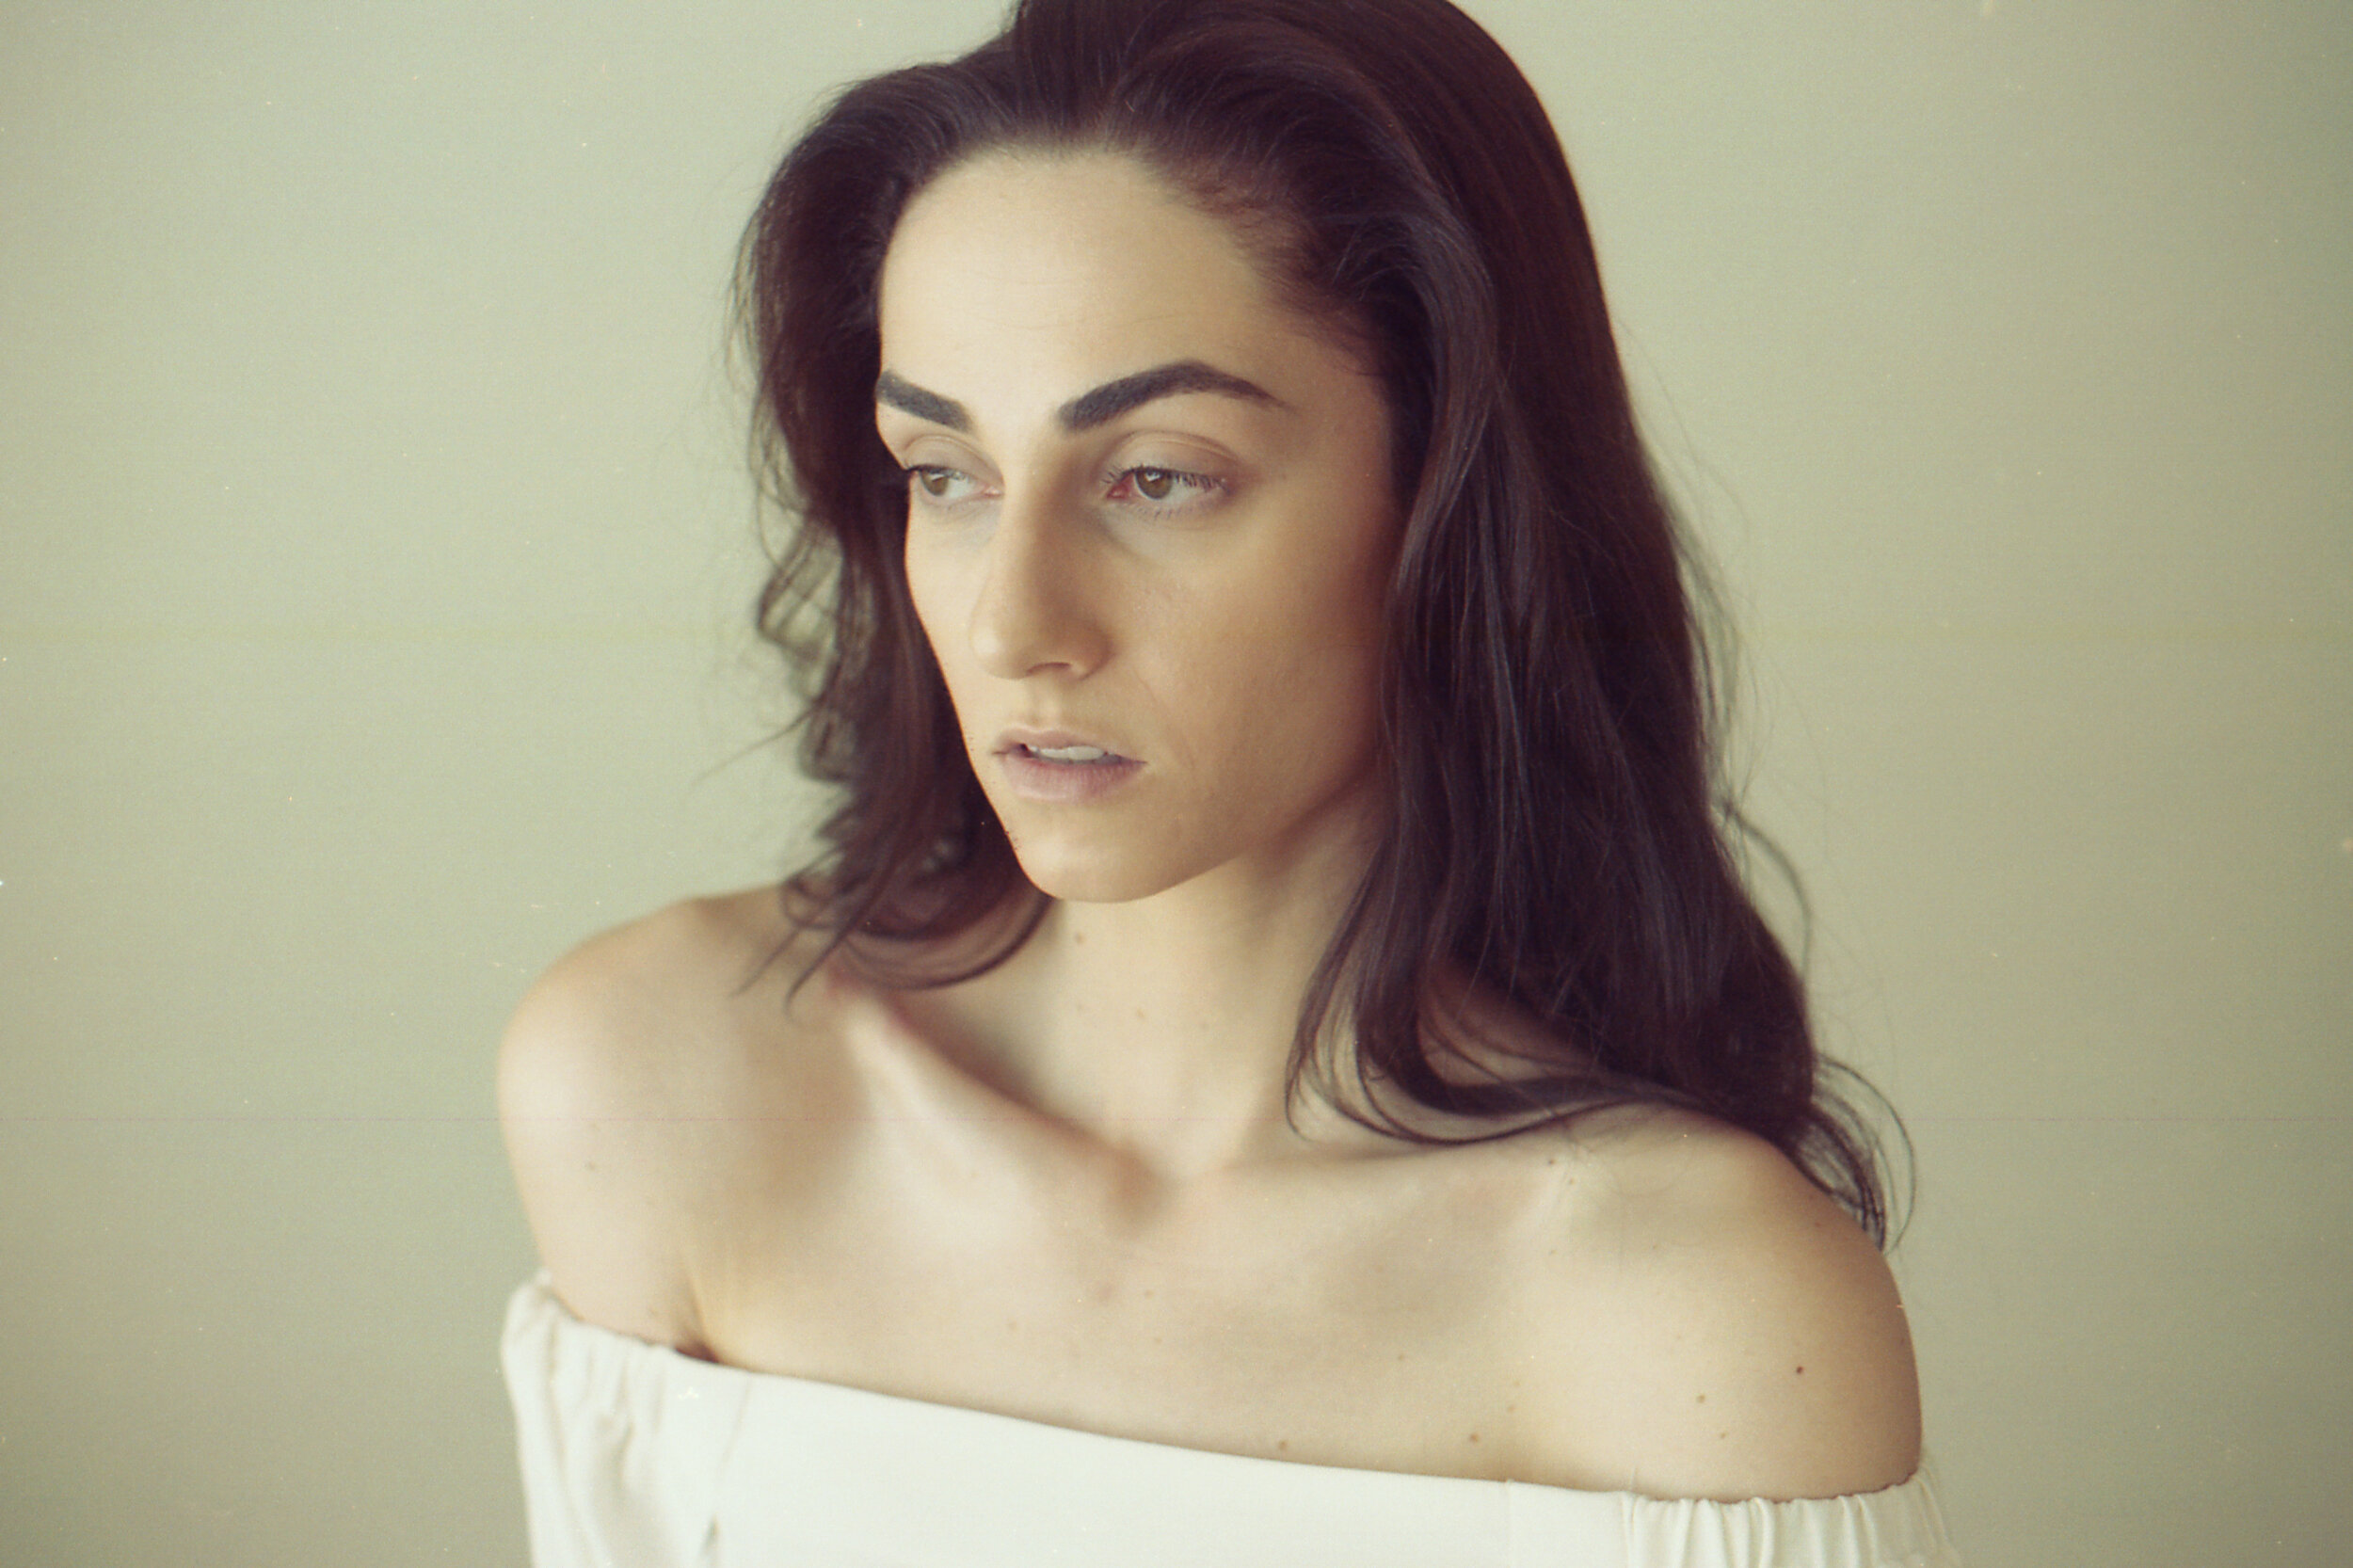 Tijana, Agency Model shot by Free Admission Photography